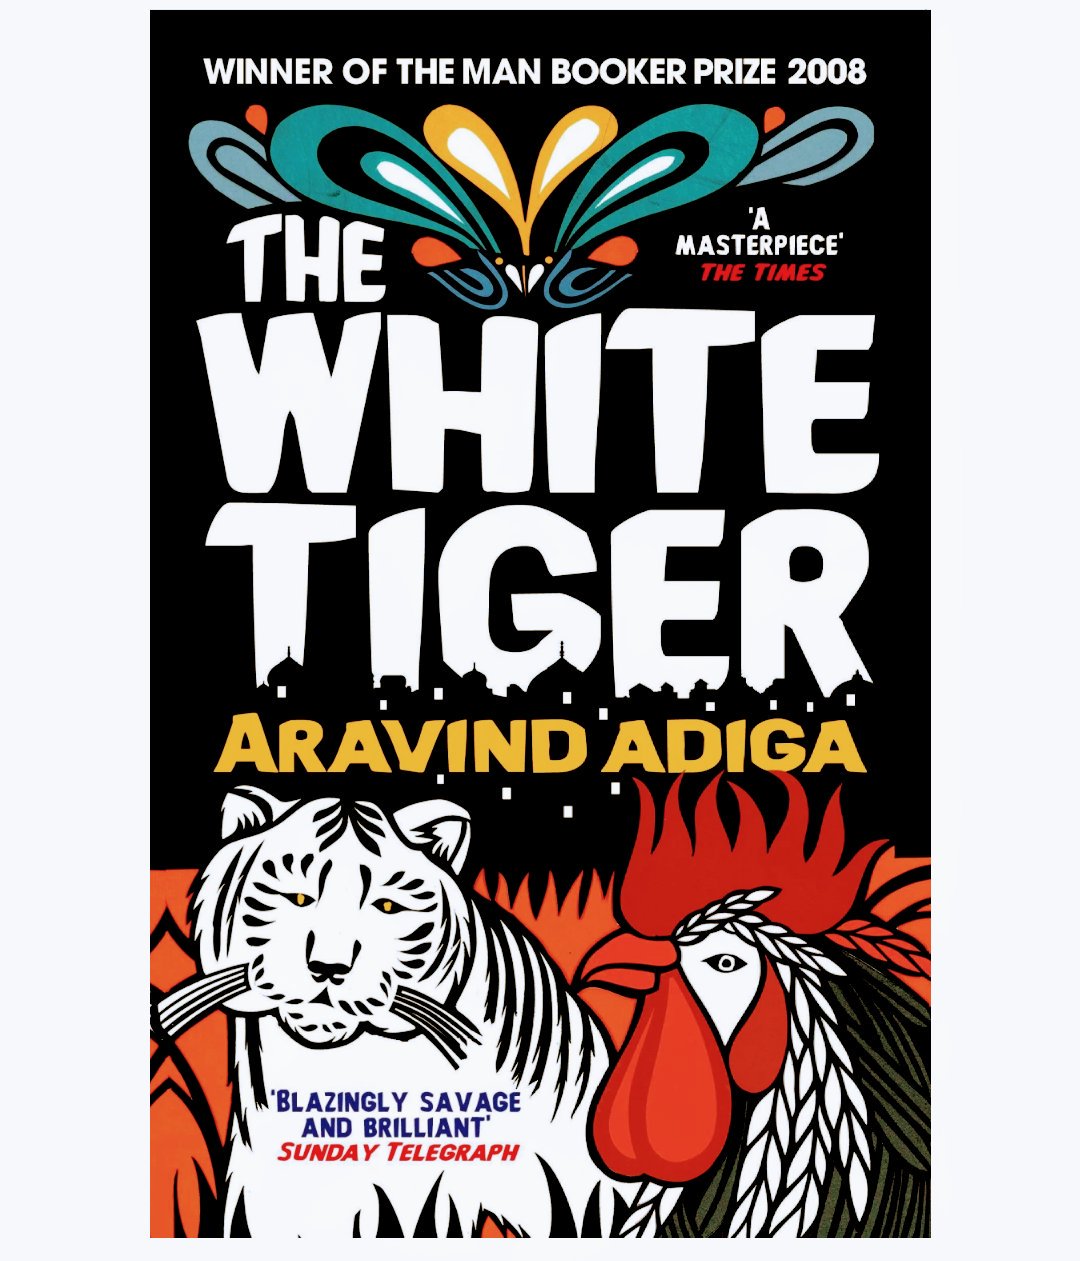 Priyanka Chopra, Rajkummar Rao To Star In 'The White Tiger